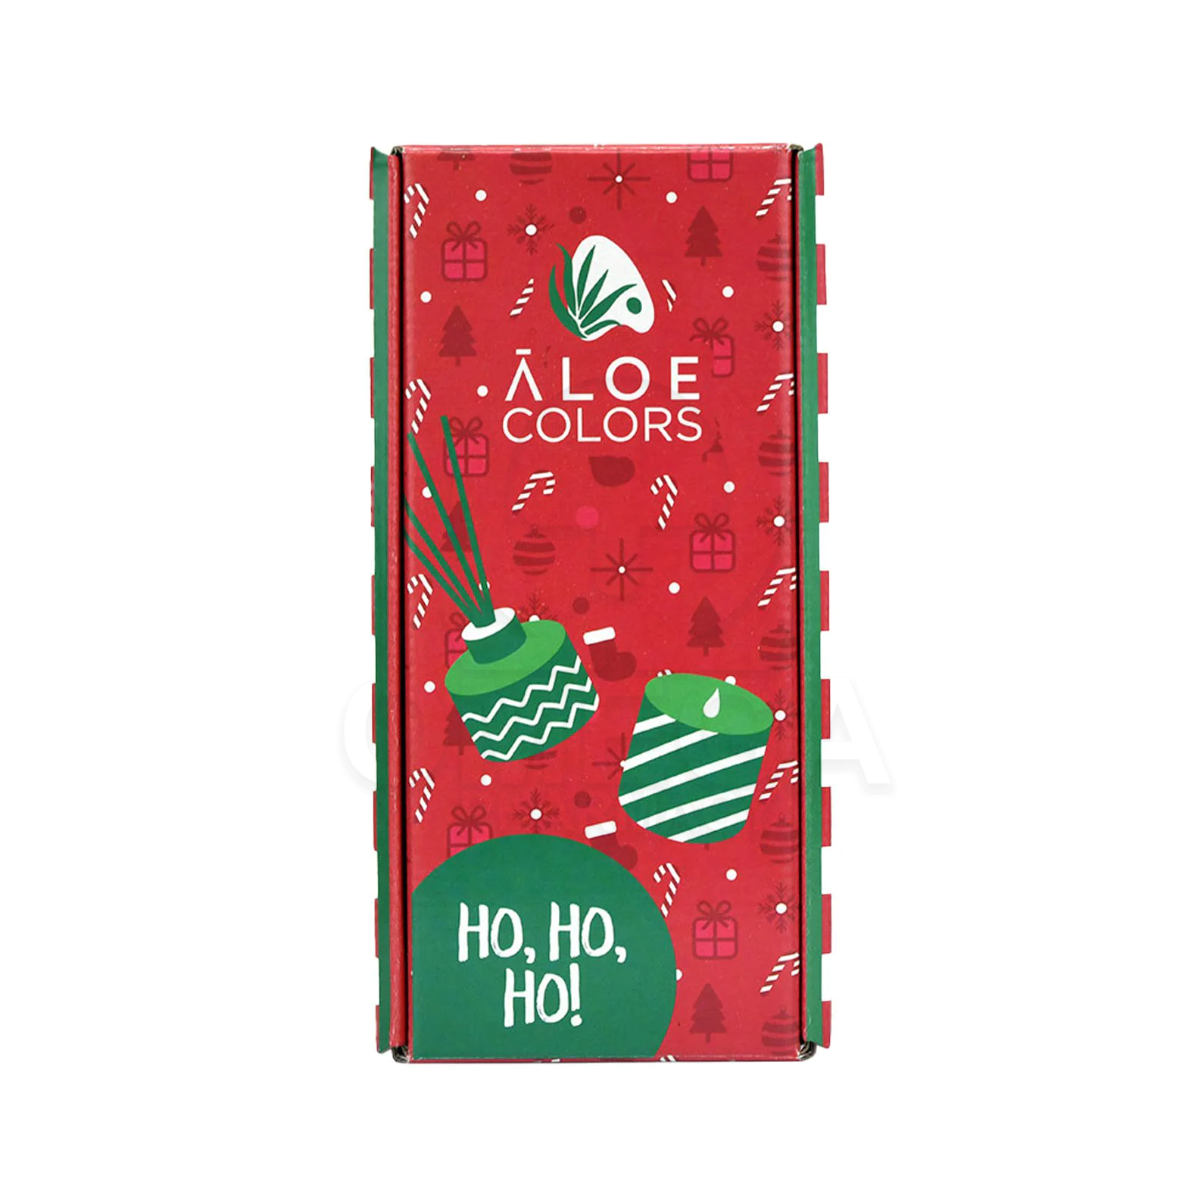 Aloe+ Colors | Ho Ho Ho Scented Soy Candle Αρωματικό Κερί Σόγιας 150gr | & Reed Diffuser Αρωματικό Χώρου Με Χριστουγεννιάτικο Άρωμα Μελομακάρονο 125ml